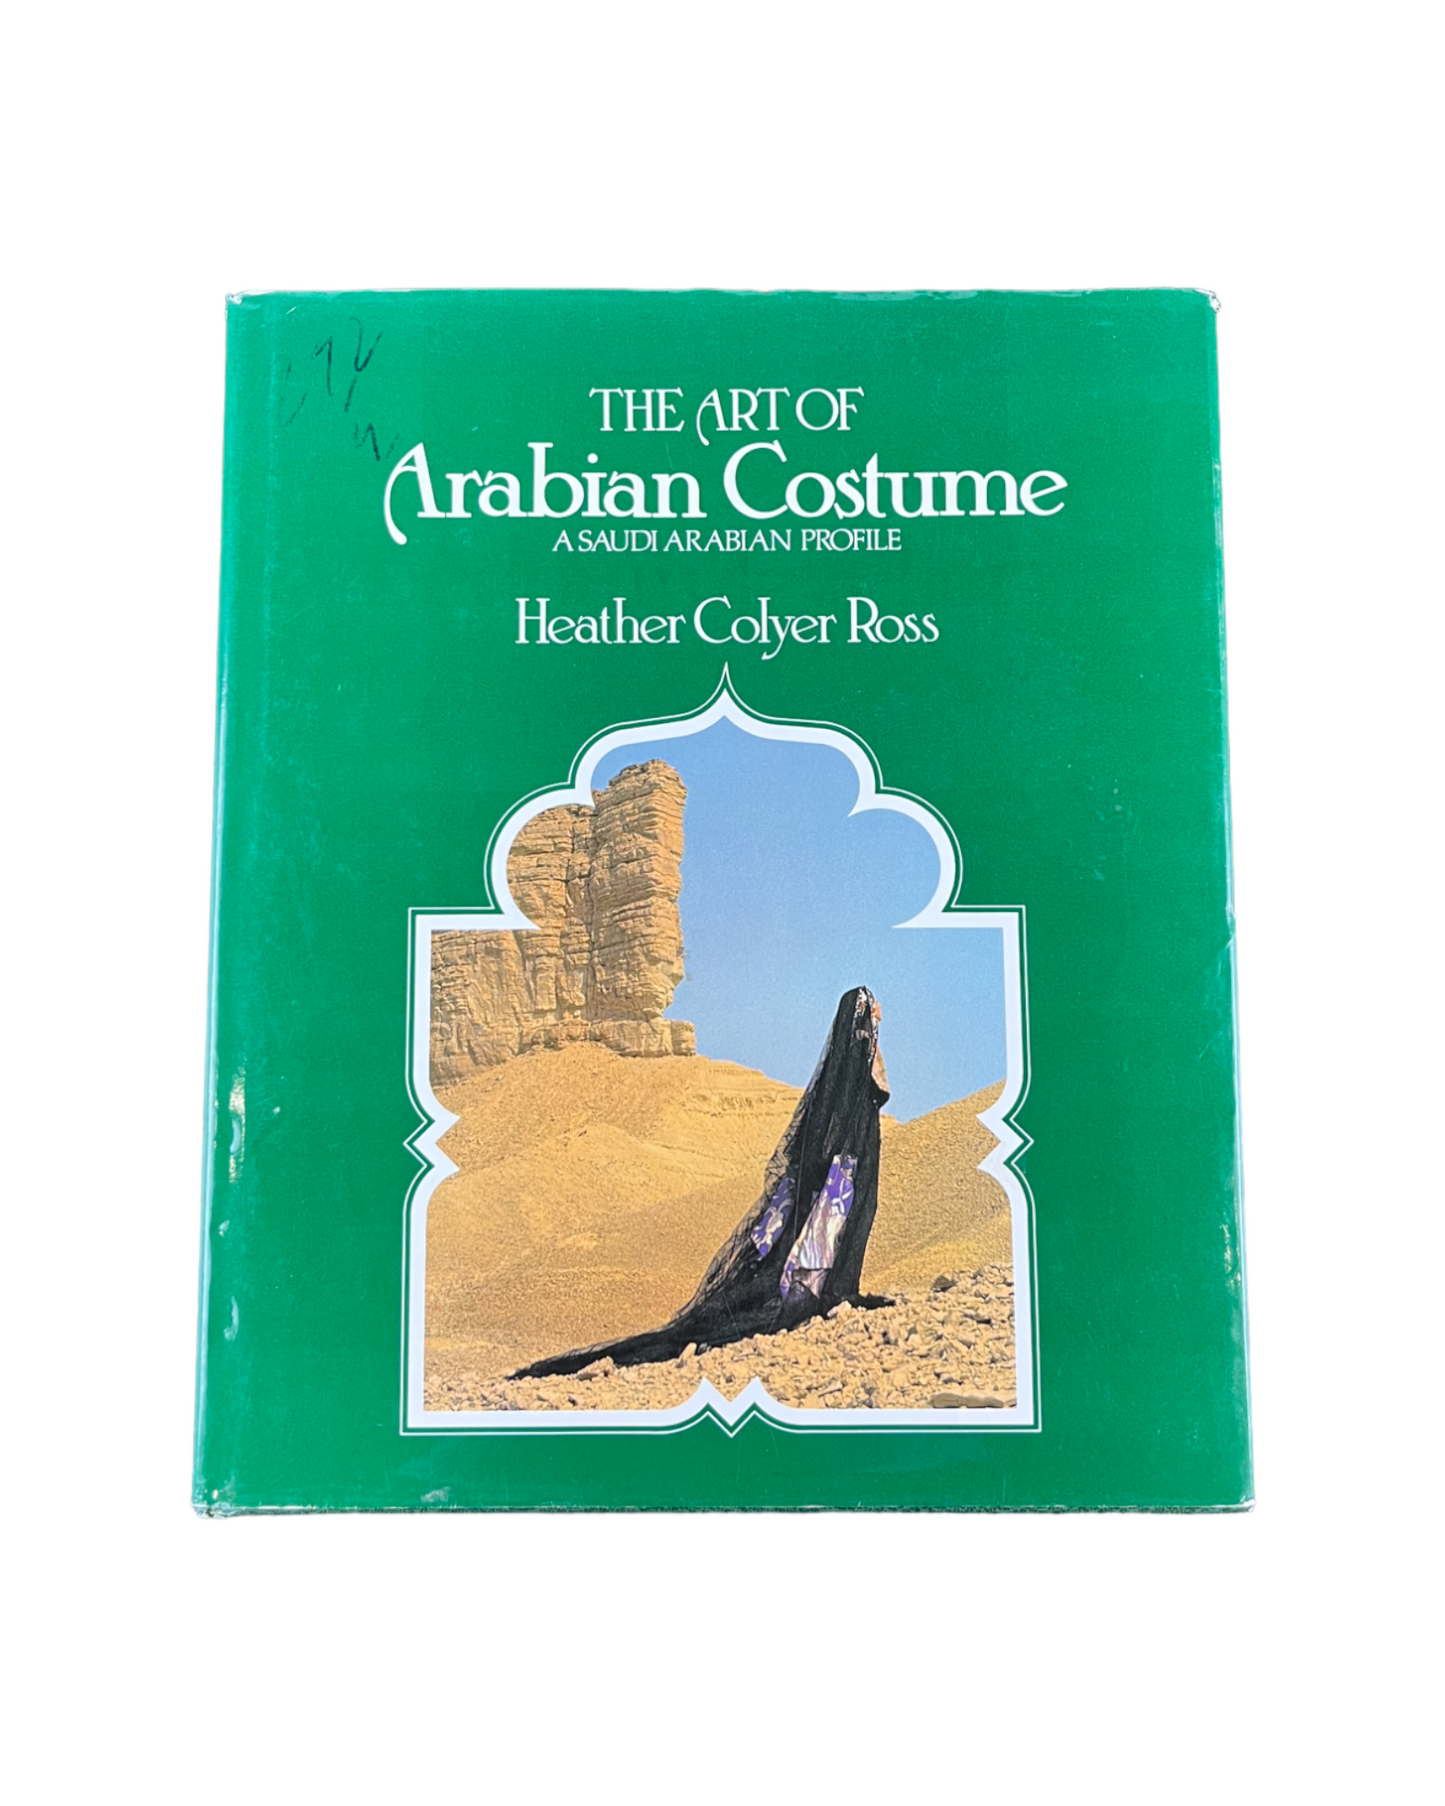 The Art of Arabian Costume- A Saudi Arabian Profile